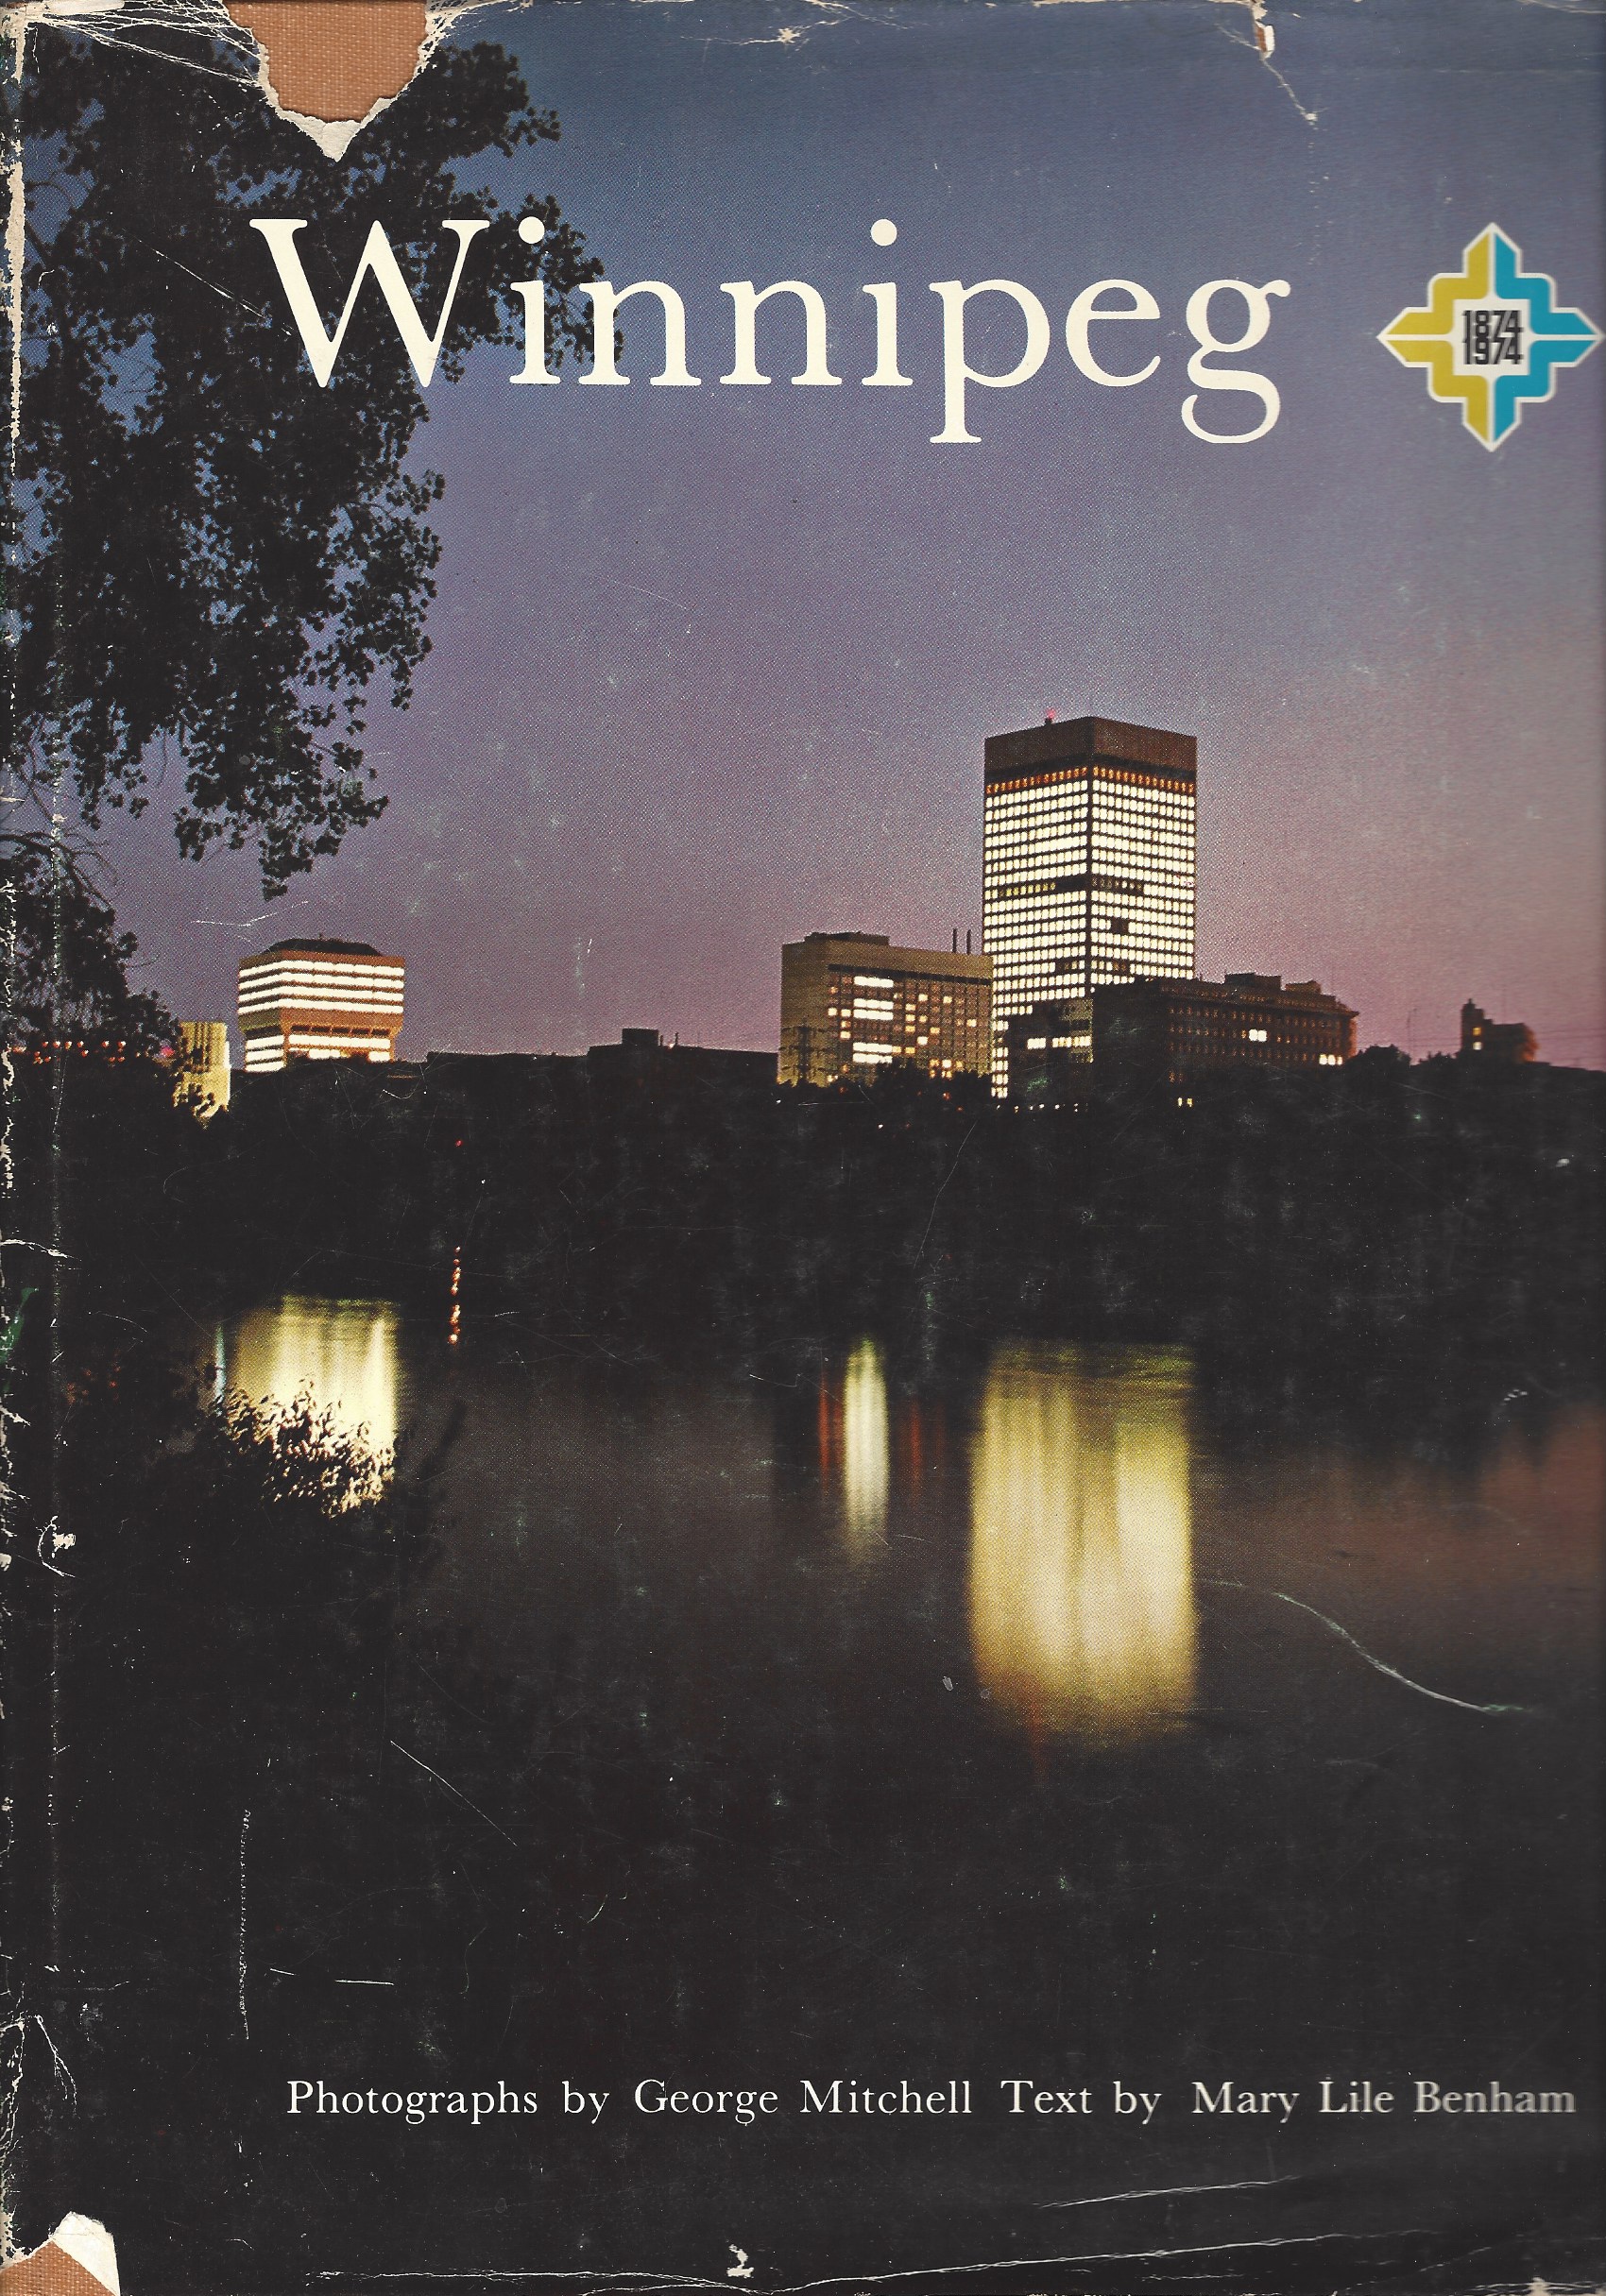 BENHAM, MARY LILE, (TEXT) GEORGE MITCHELL, (PHOTOGRAPHS) - Winnipeg ** Signed by Mayor Stephen Juba